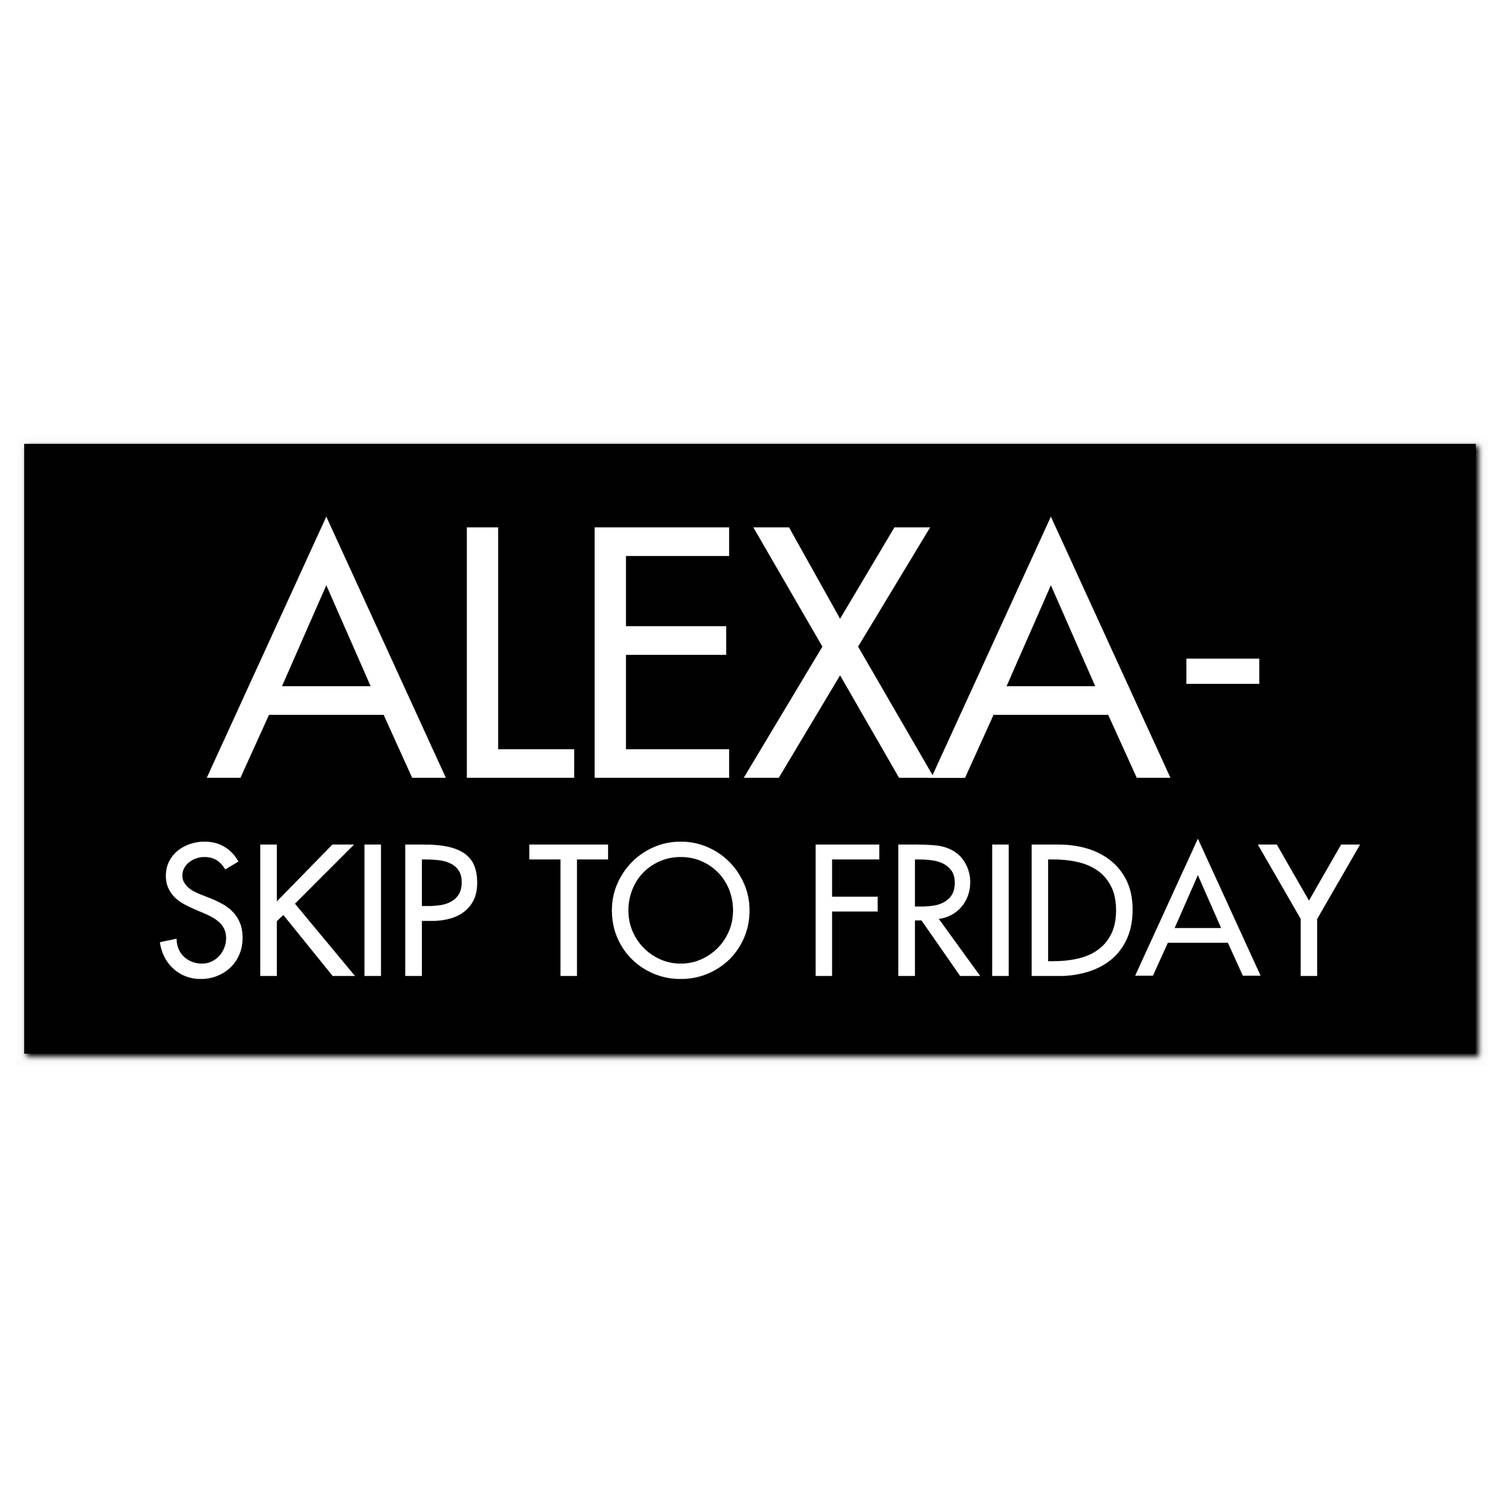 Alexa-Skip To Friday Silver Foil  Plaque - Image 1